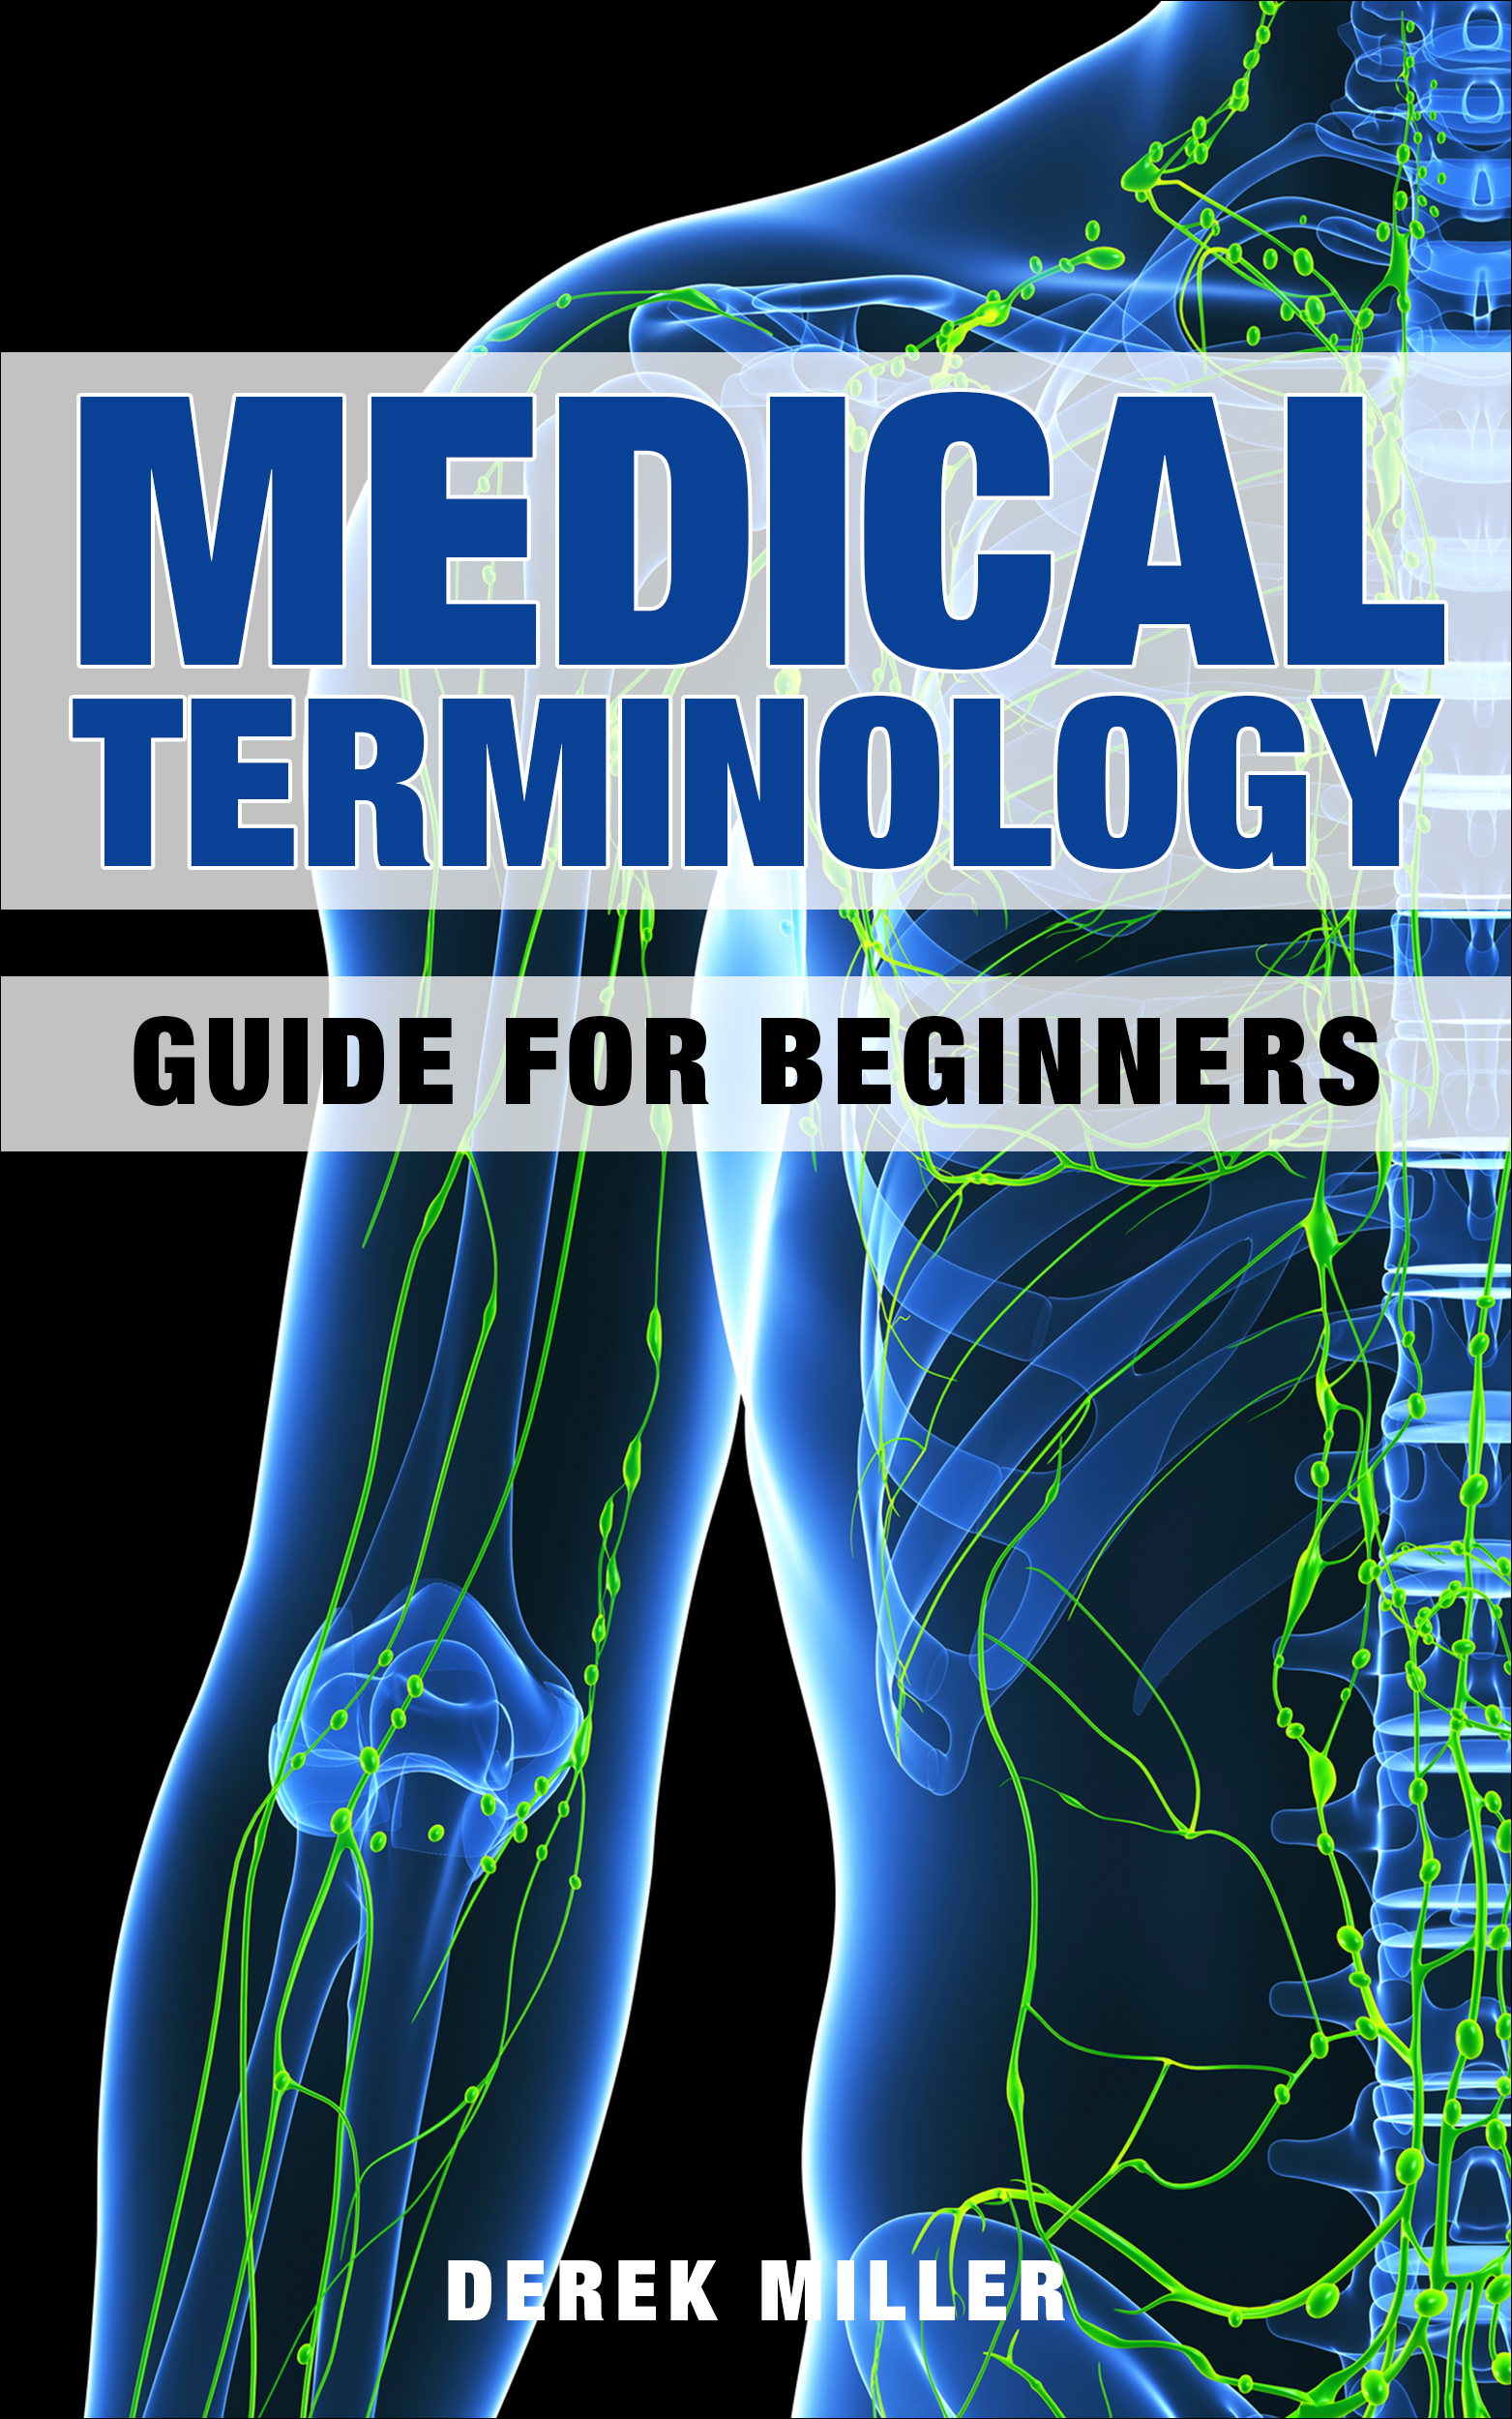 FREE: Medical Terminology: Guide for Beginners by Derek Miller